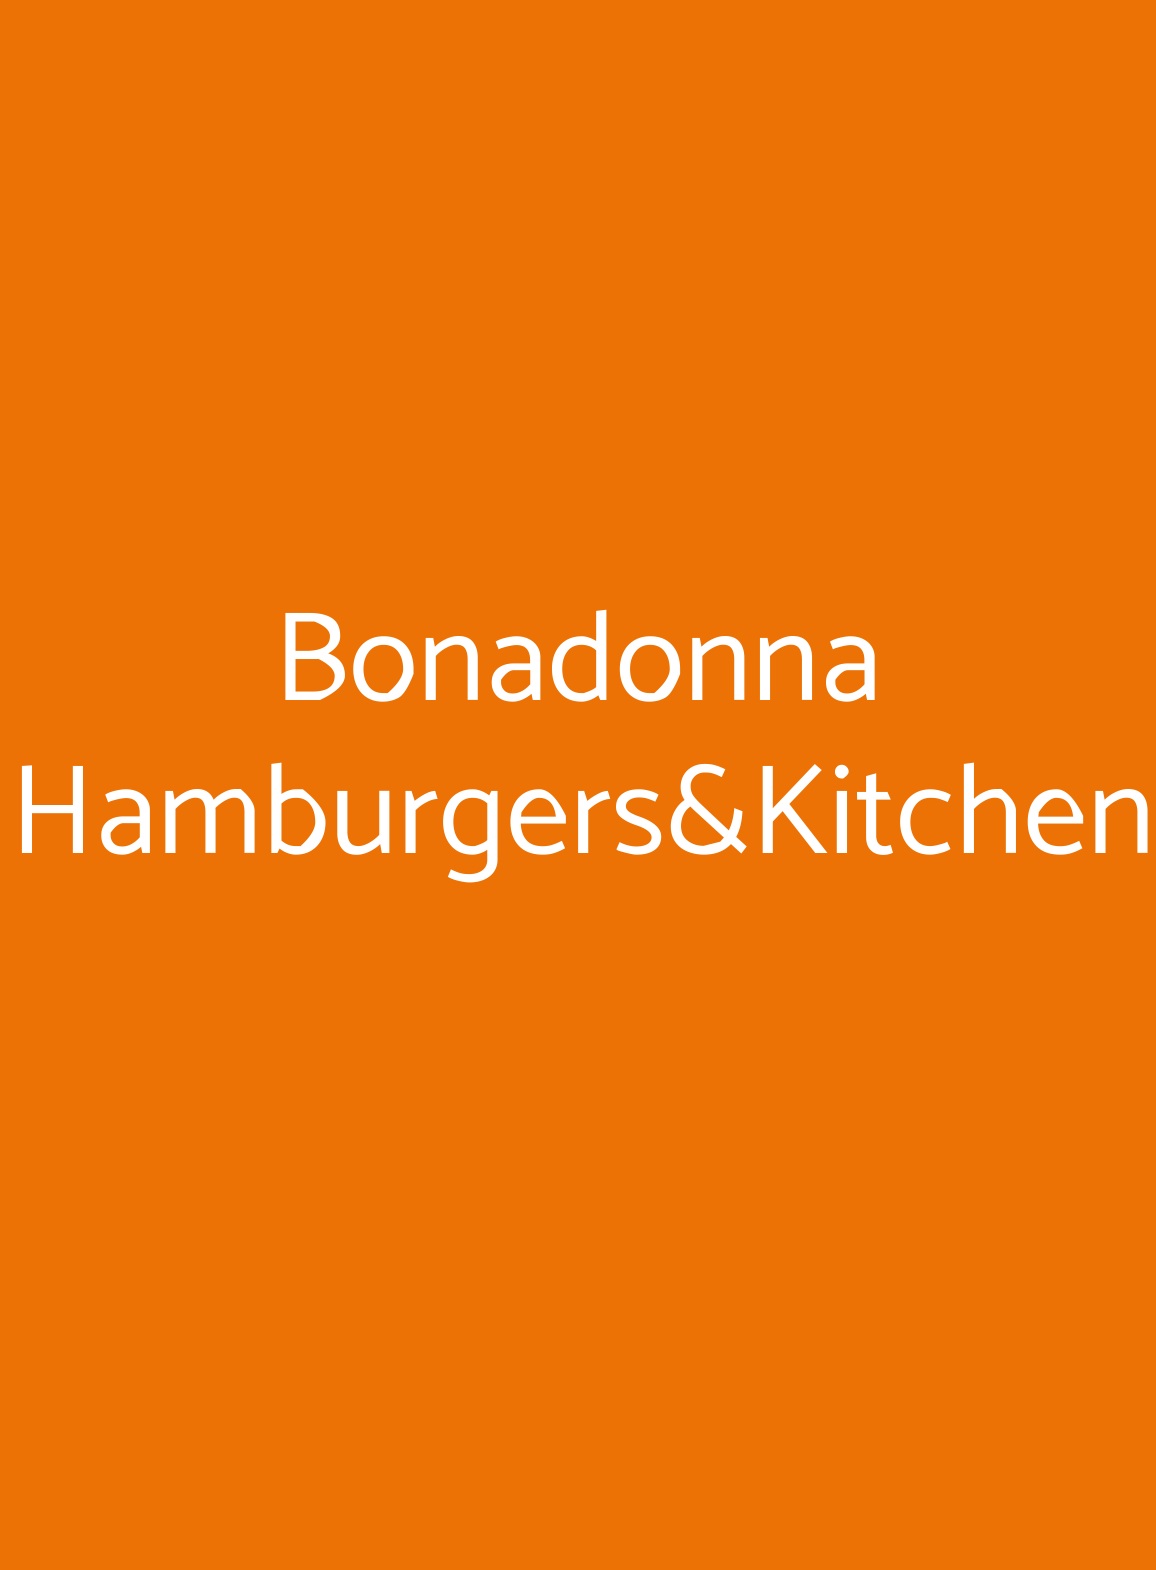 Bonadonna Hamburgers&Kitchen Milano menù 1 pagina